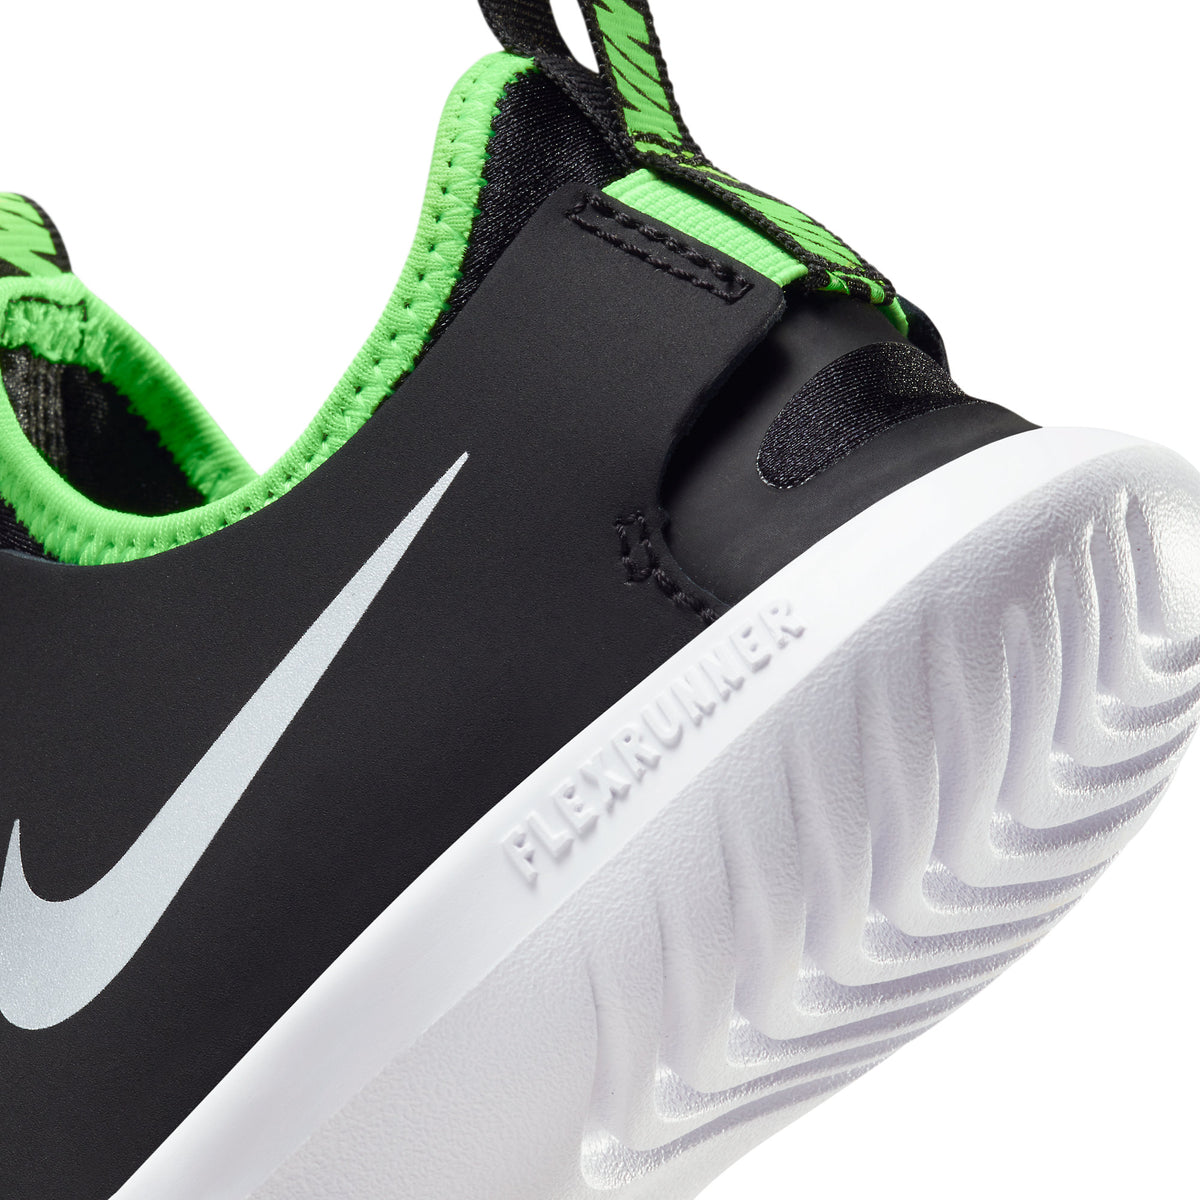 Zapatilla Nike Flex Runner de niño color Negro con Verde